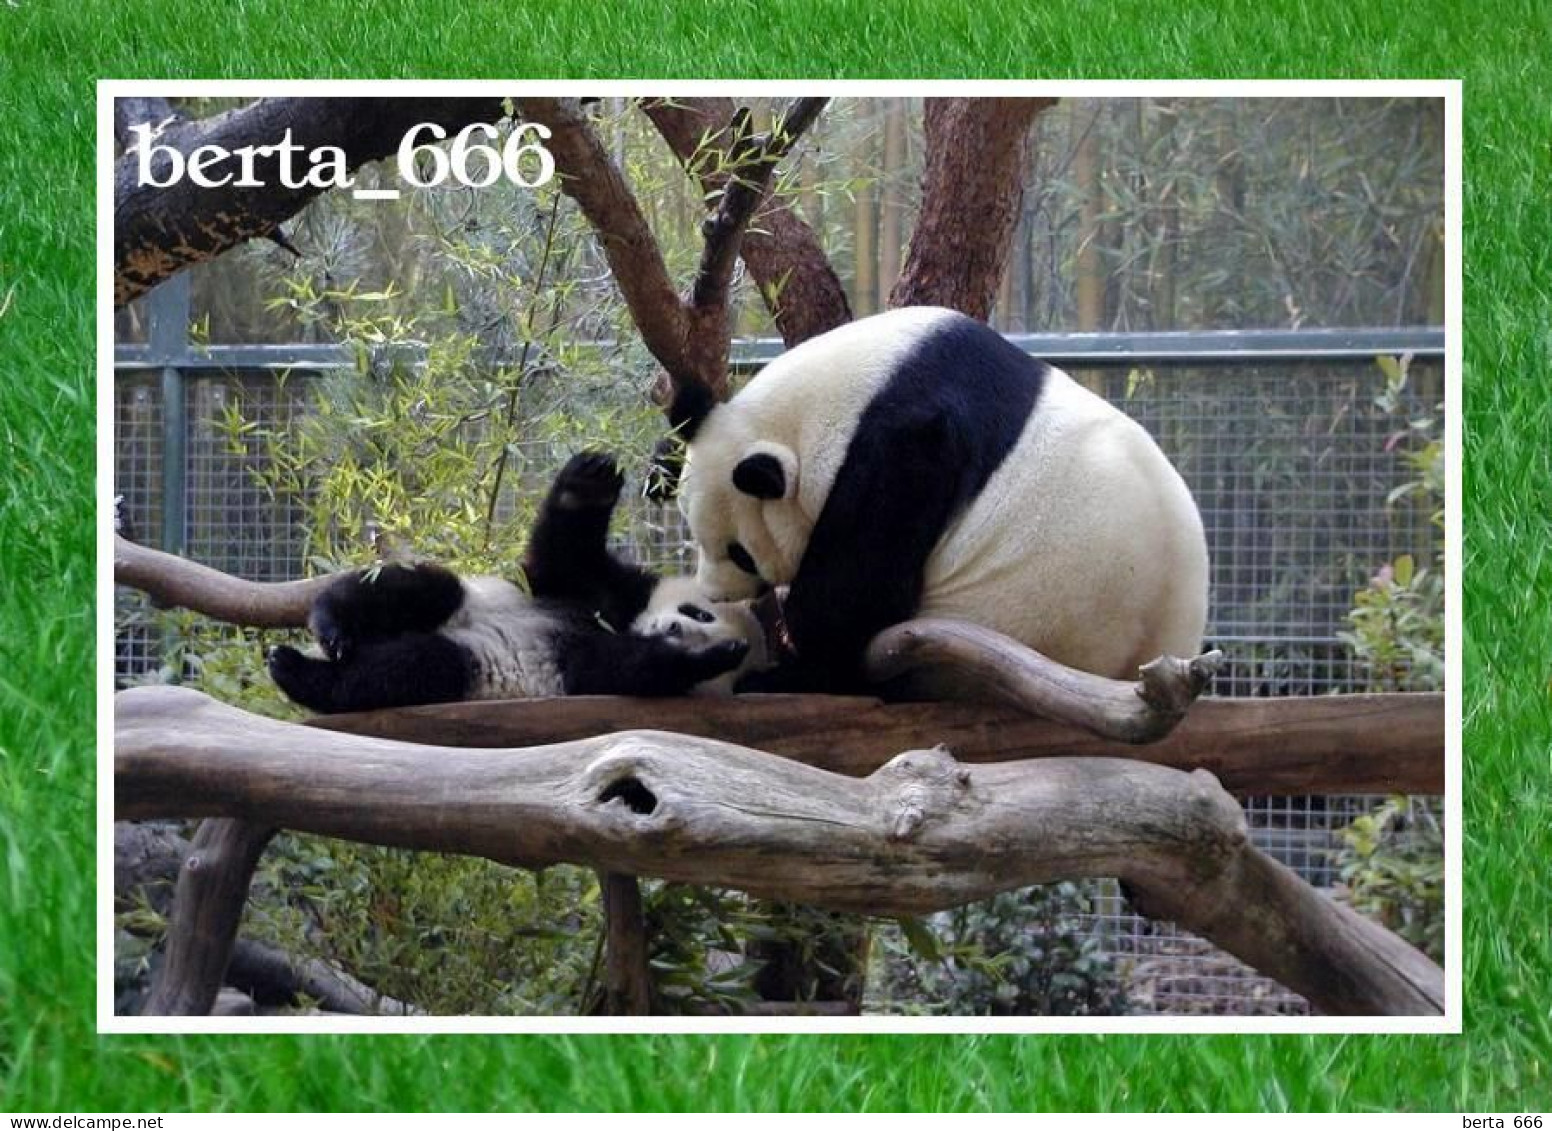 Animals * Giant Panda Bears - Bären